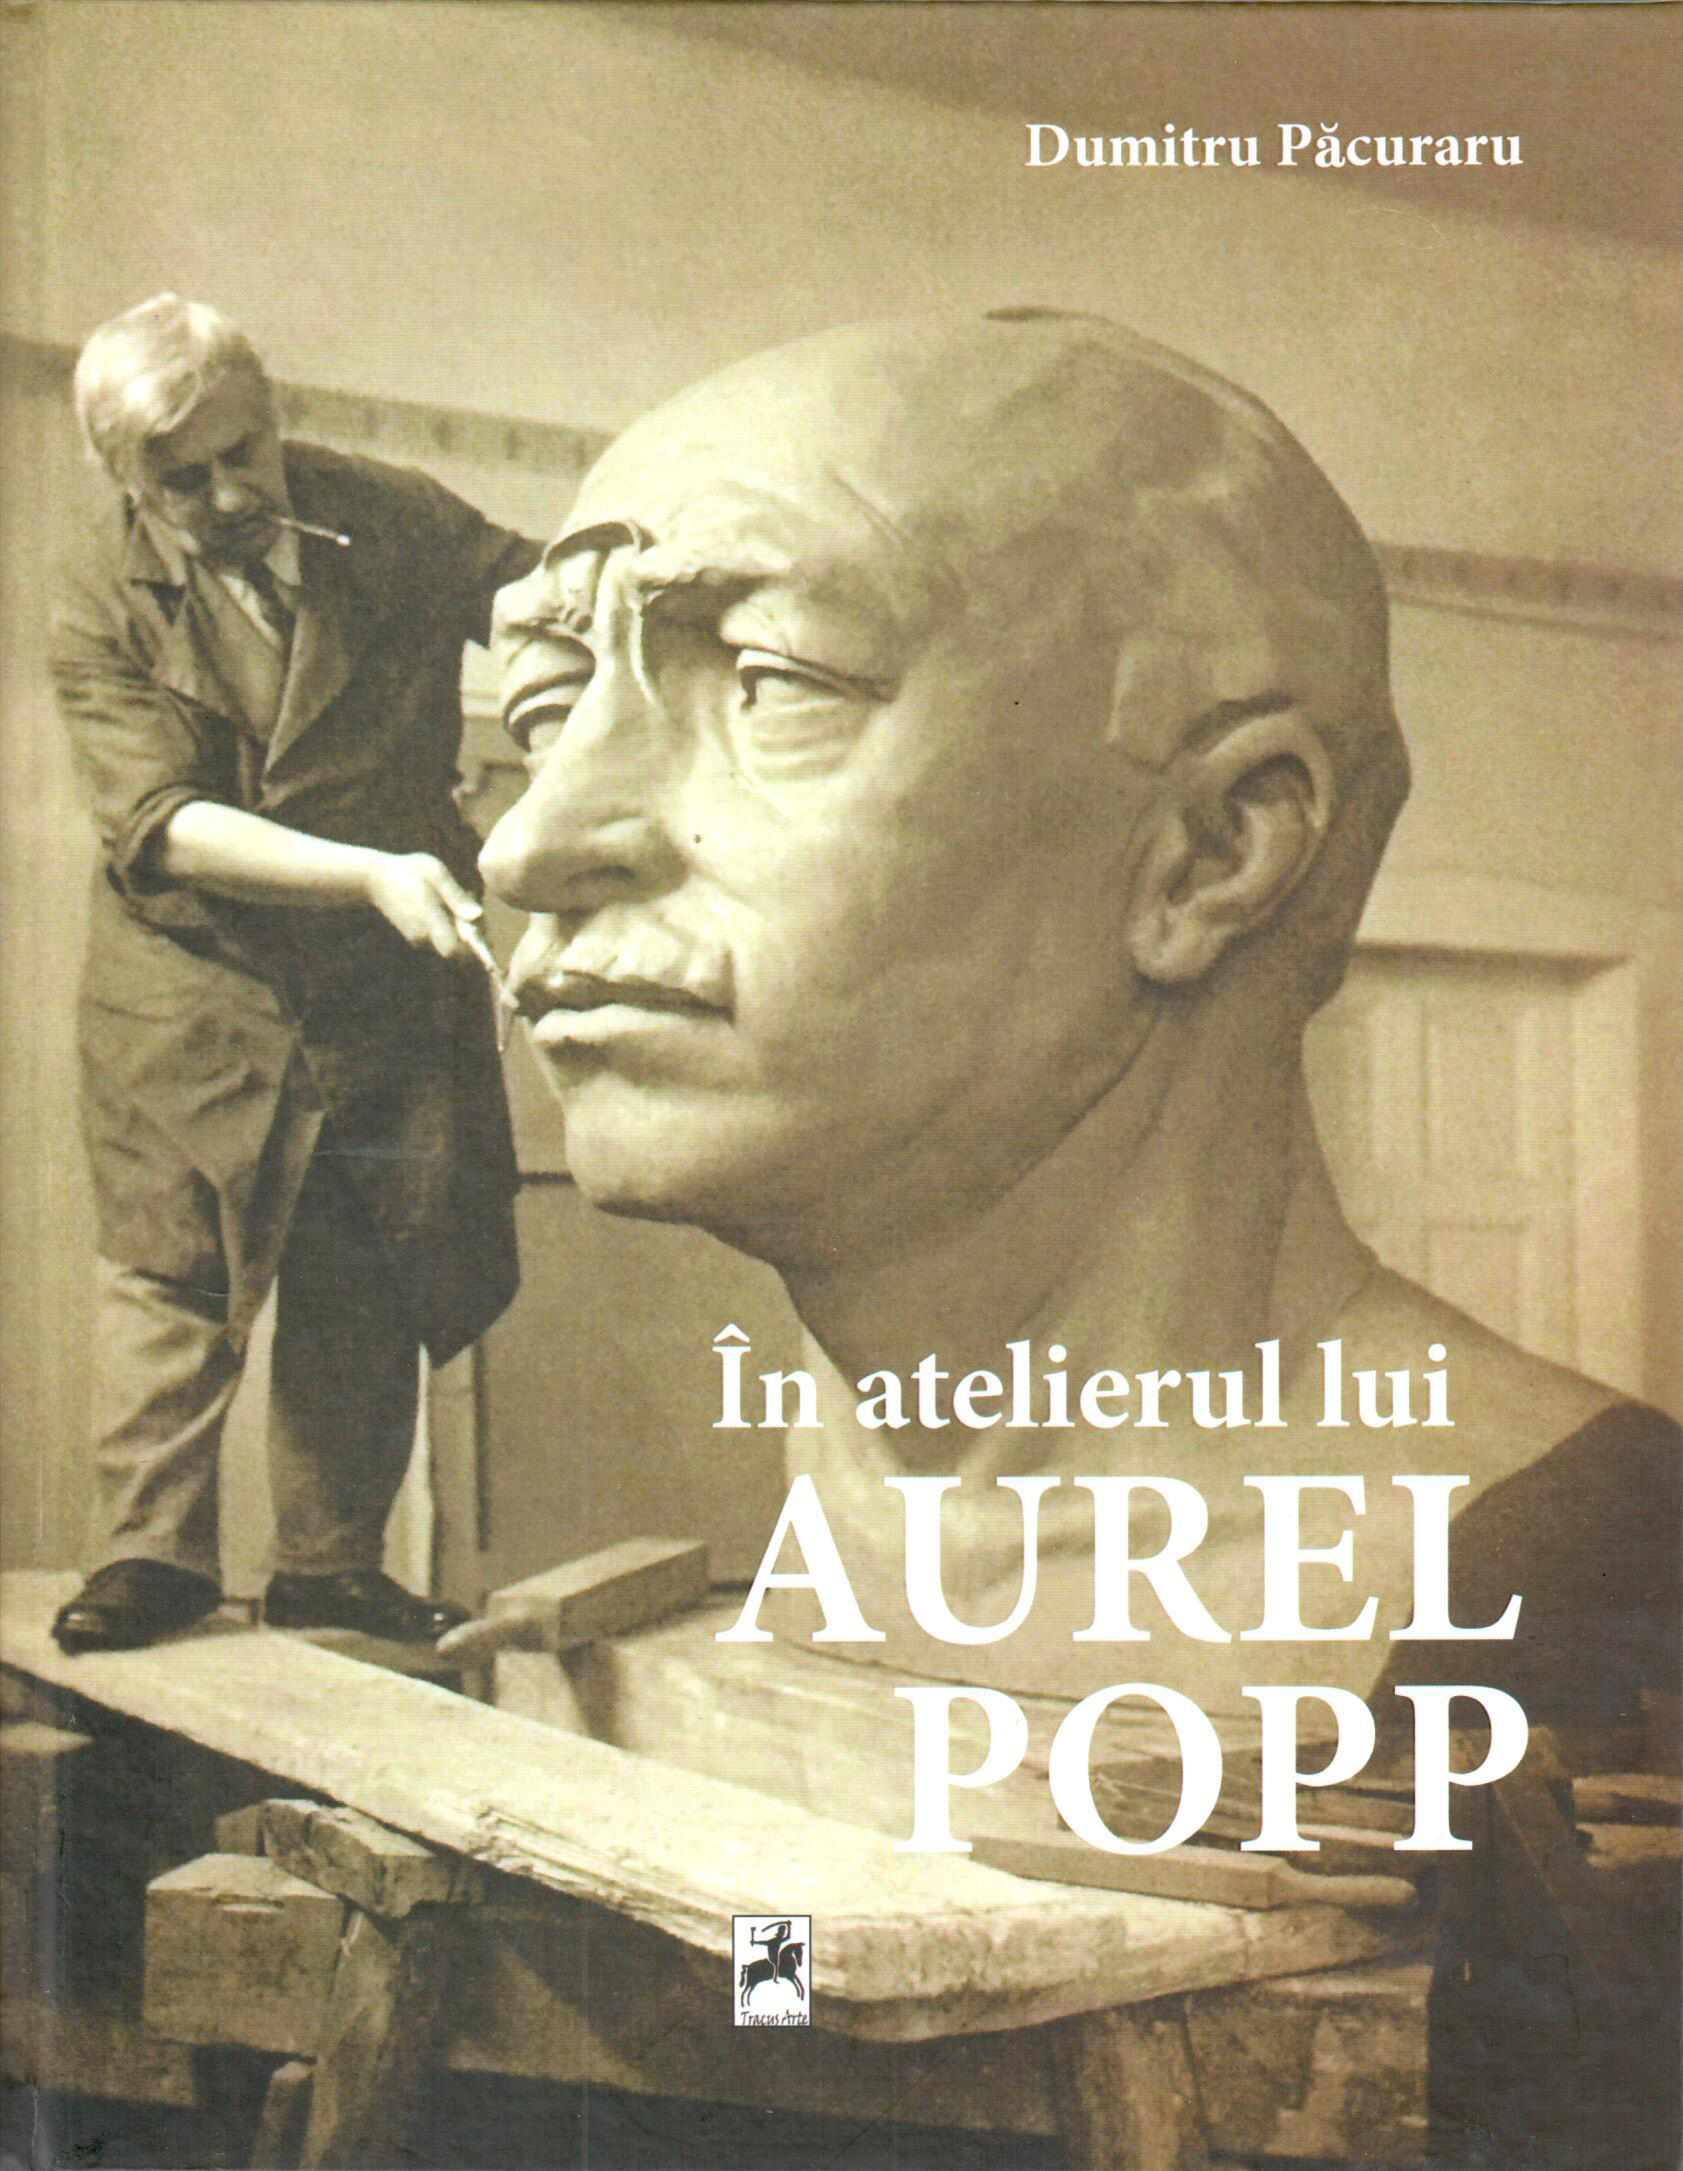 In atelierul lui Aurel Popp | Dumitru Pacuraru carturesti.ro Arta, arhitectura